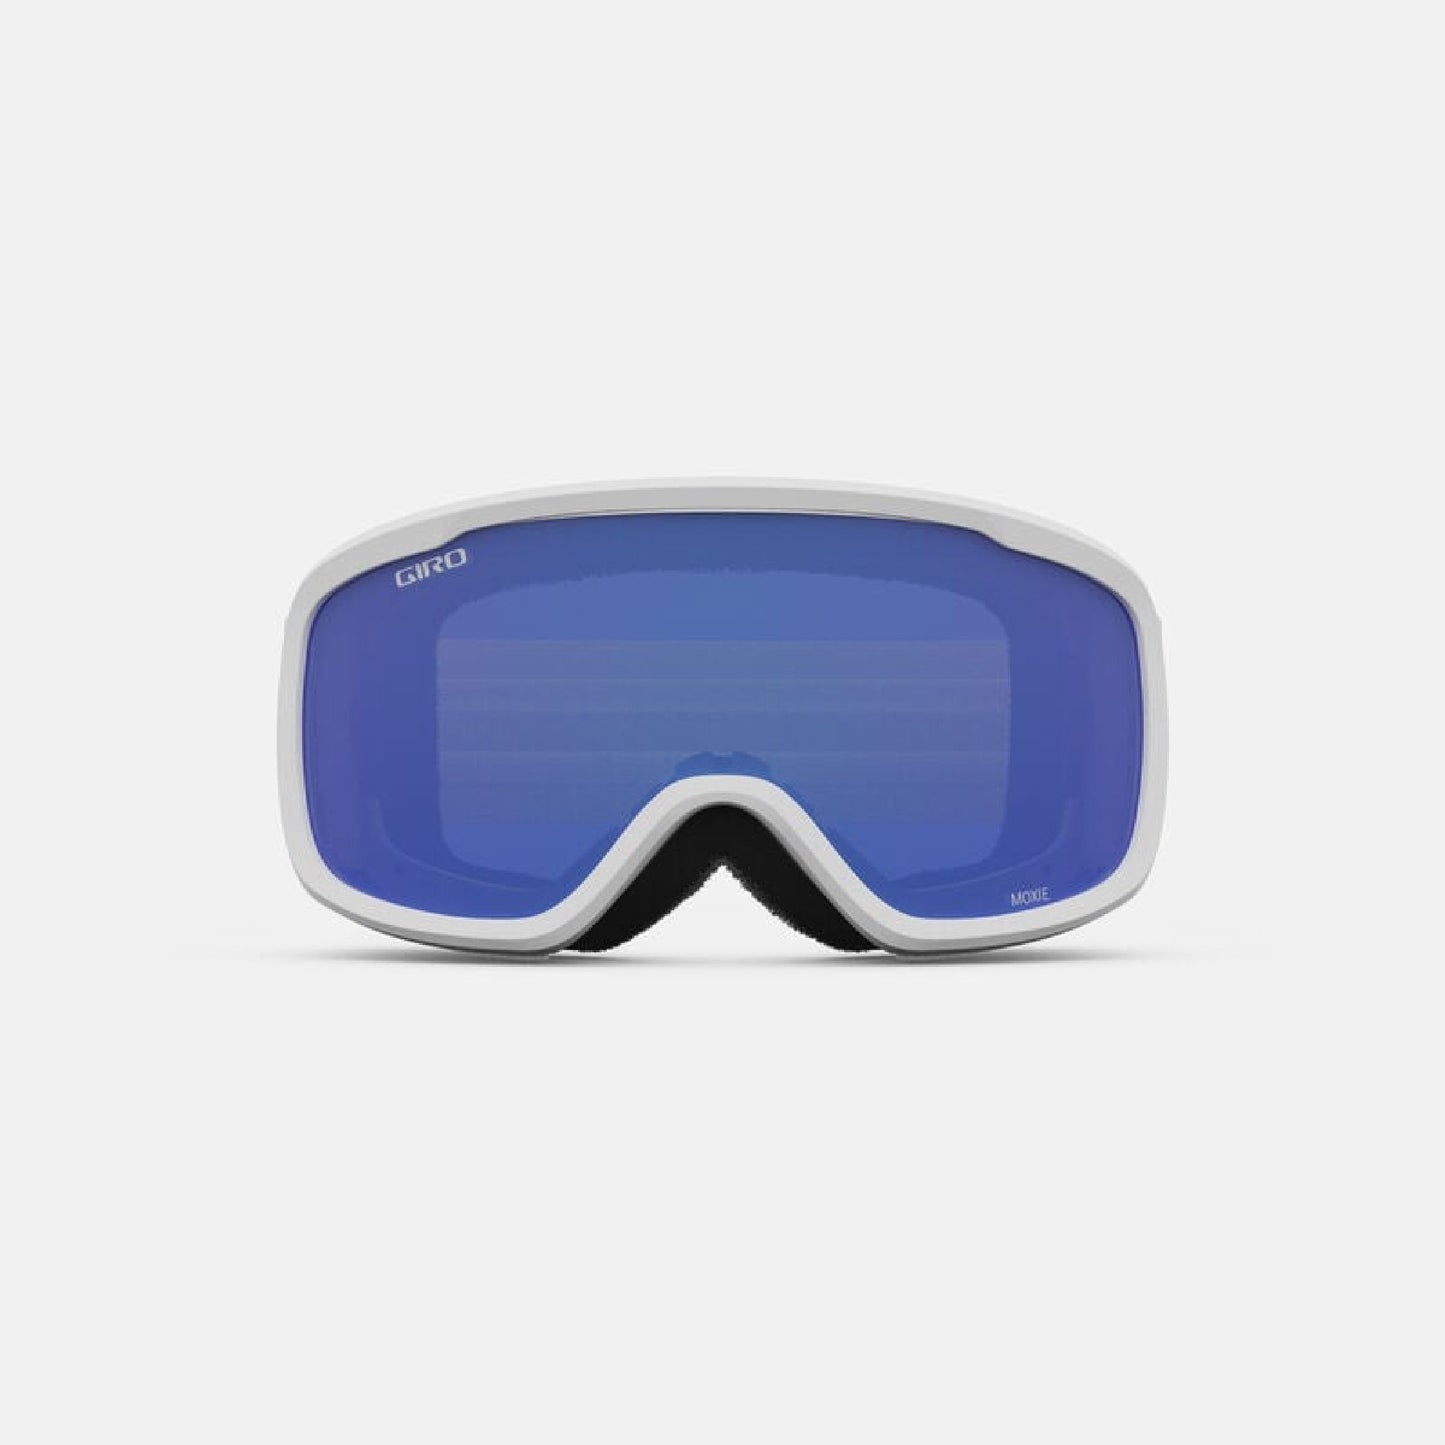 Giro Women's Moxie Snow Goggles White Core Light / Gray Cobalt Snow Goggles